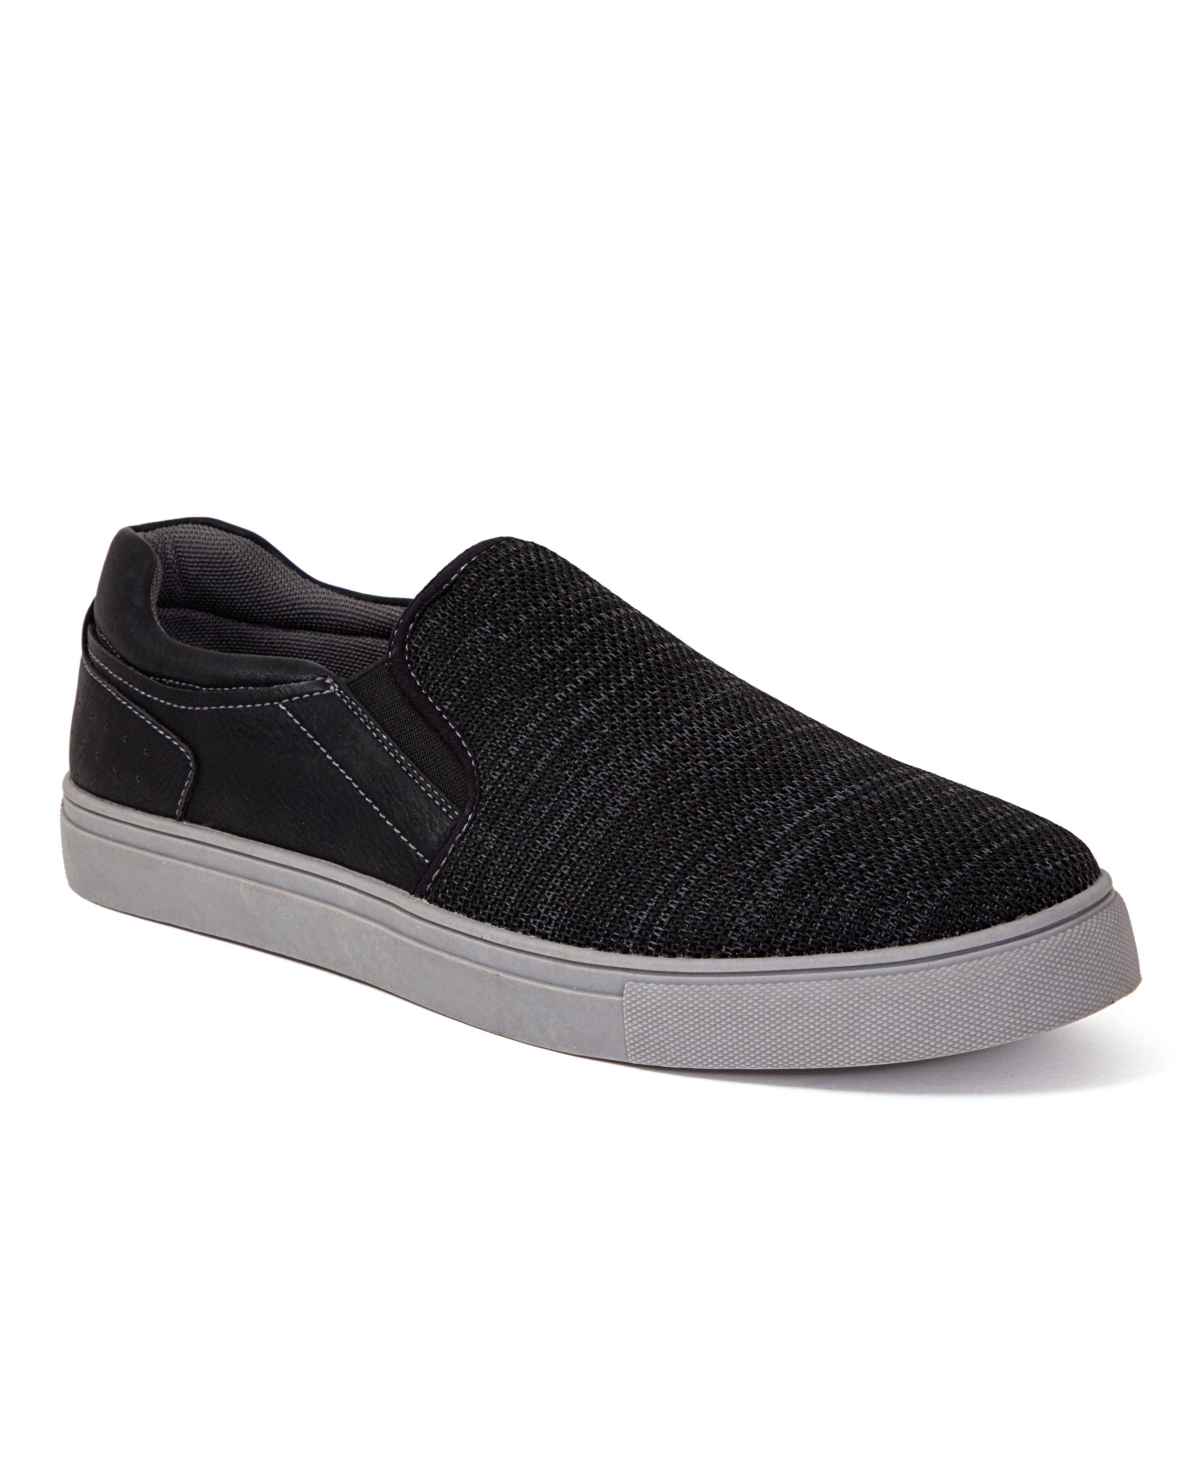 Men's Bryce Comfort Slip-On Fashion Sneakers - Black